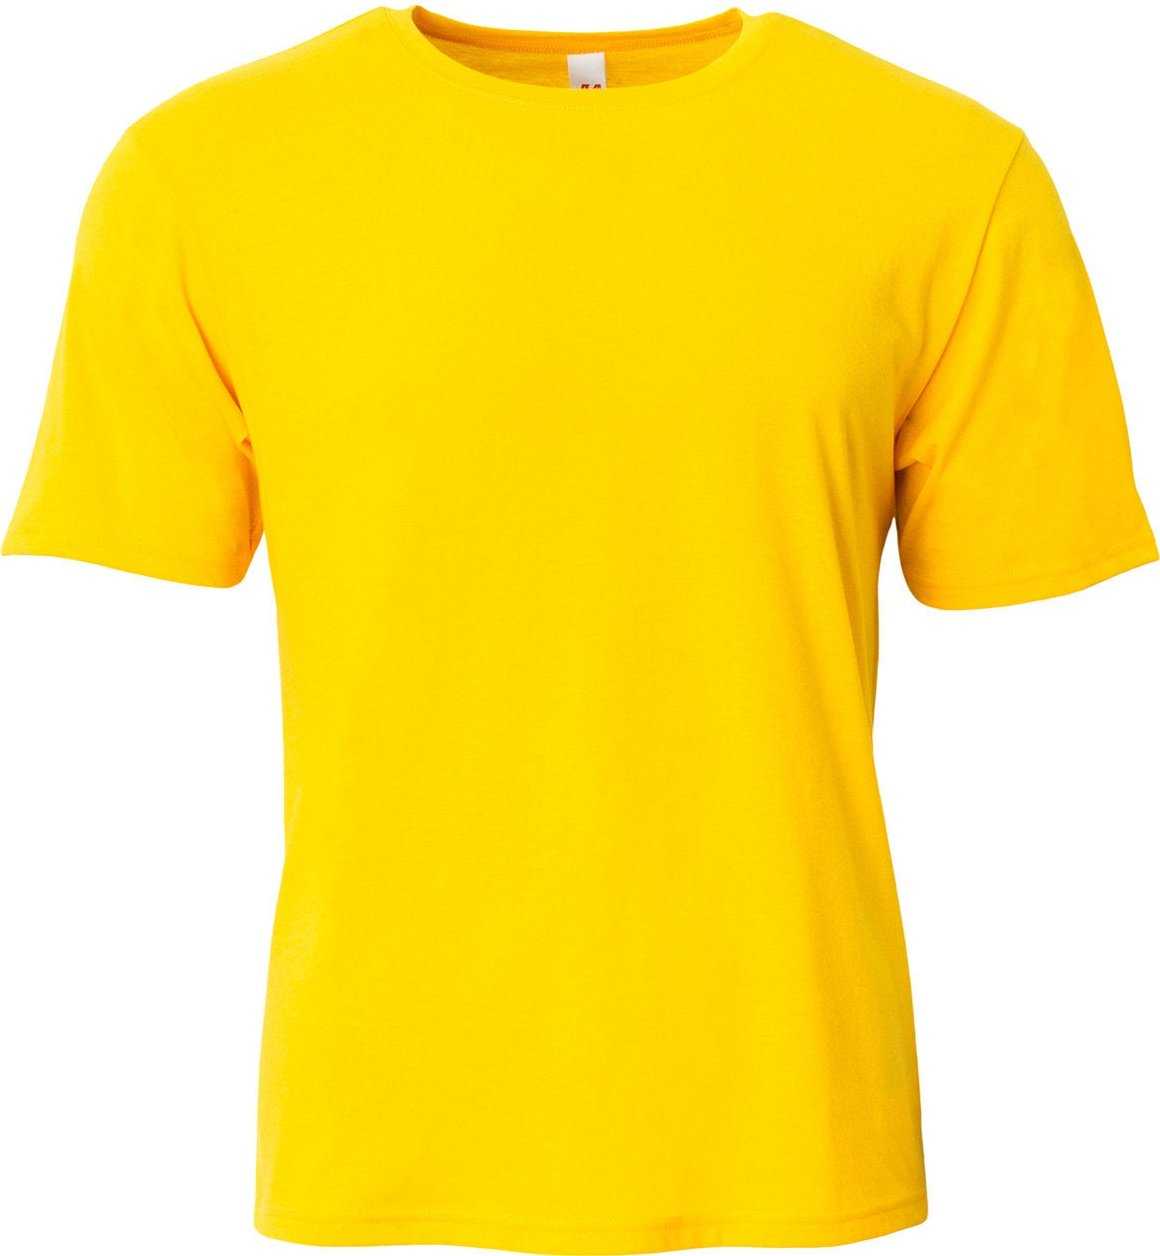 A4 NB3013 Youth Softek T-Shirt - Gold